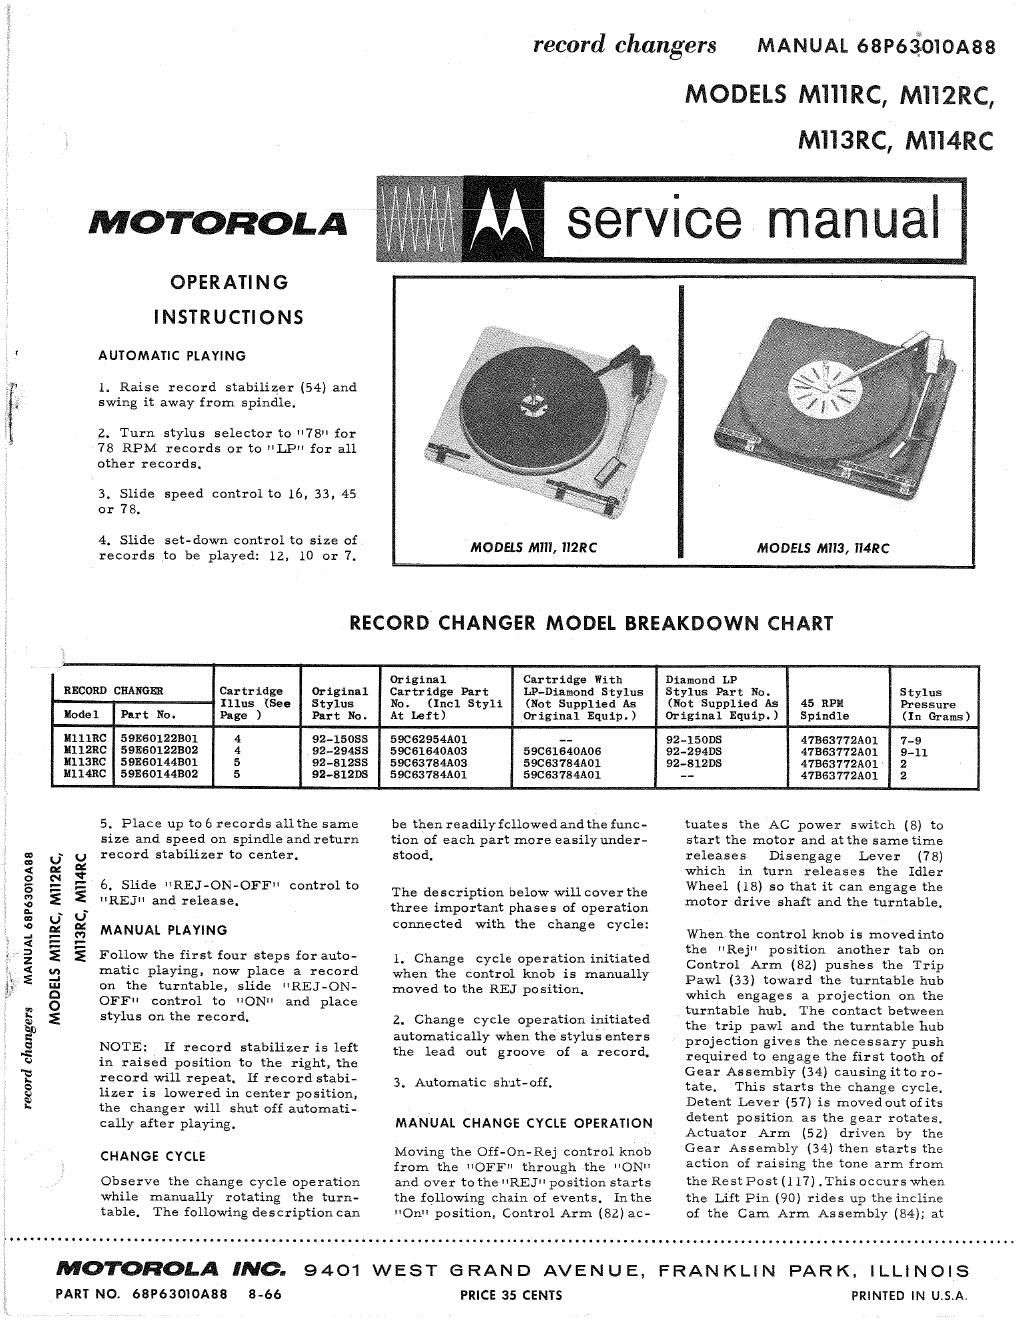 motorola m 114 rc service manual